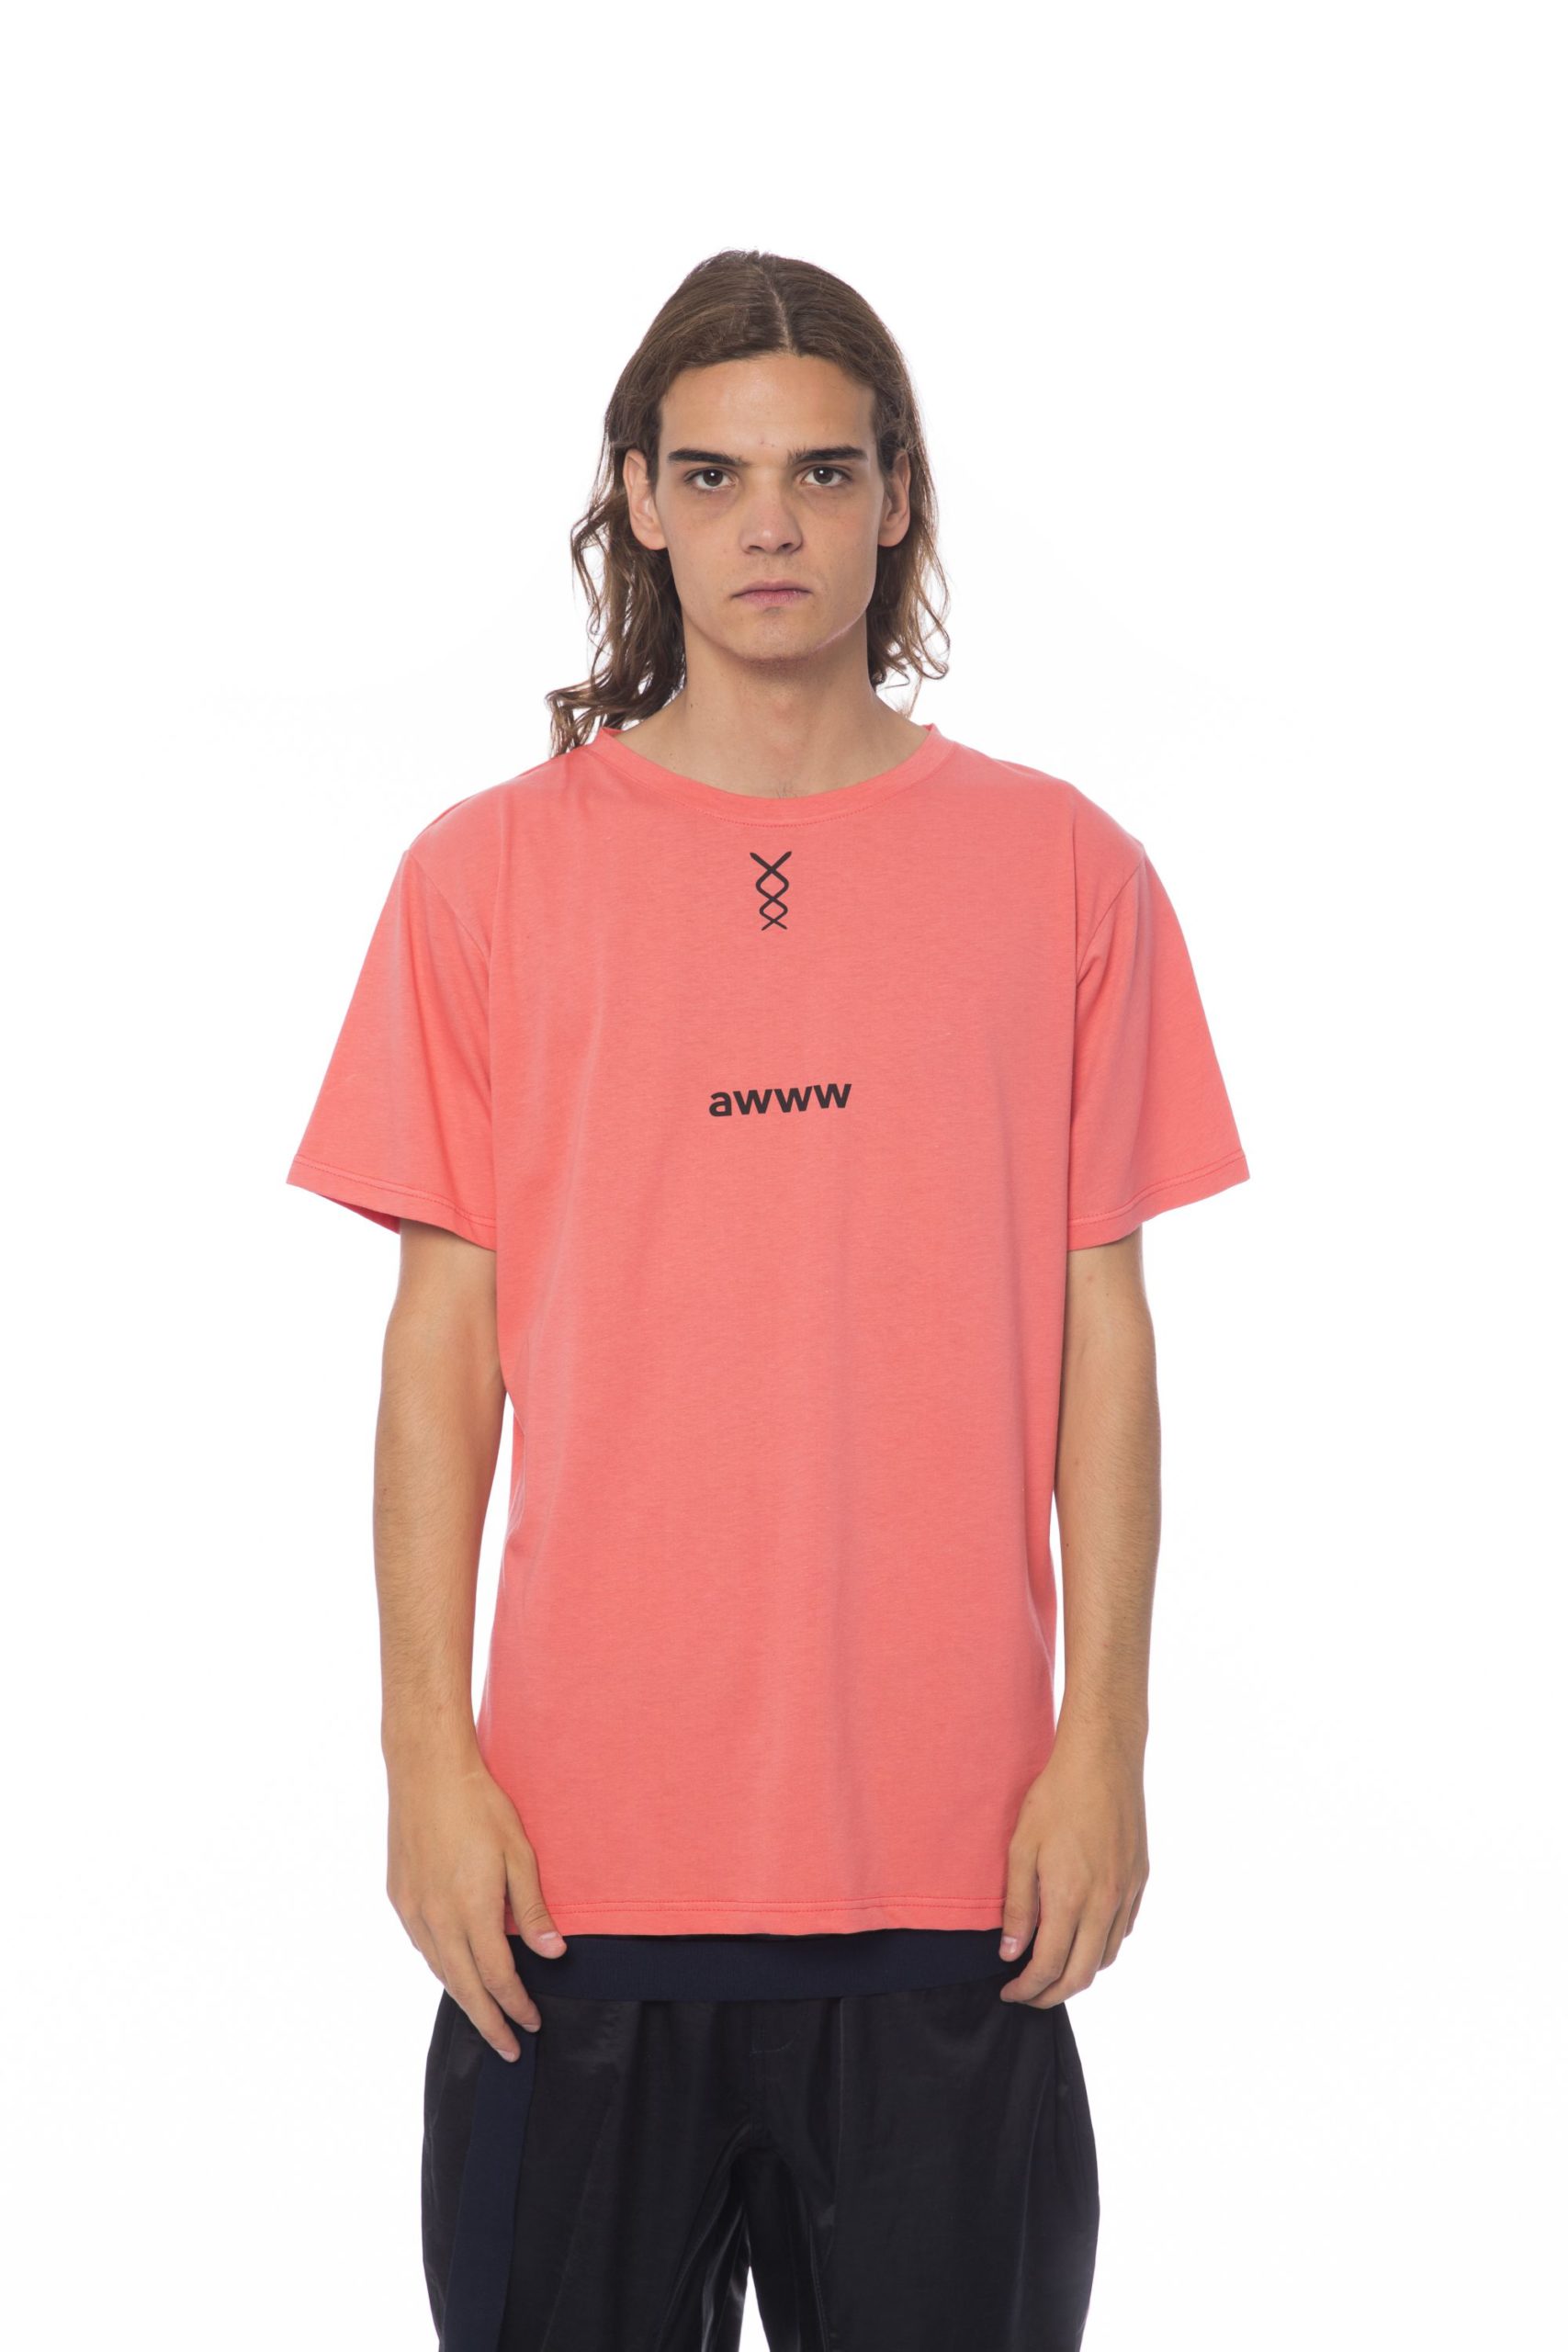 Nicolo Tonetto Men's Salmone T-Shirt Pink NI680317 - M